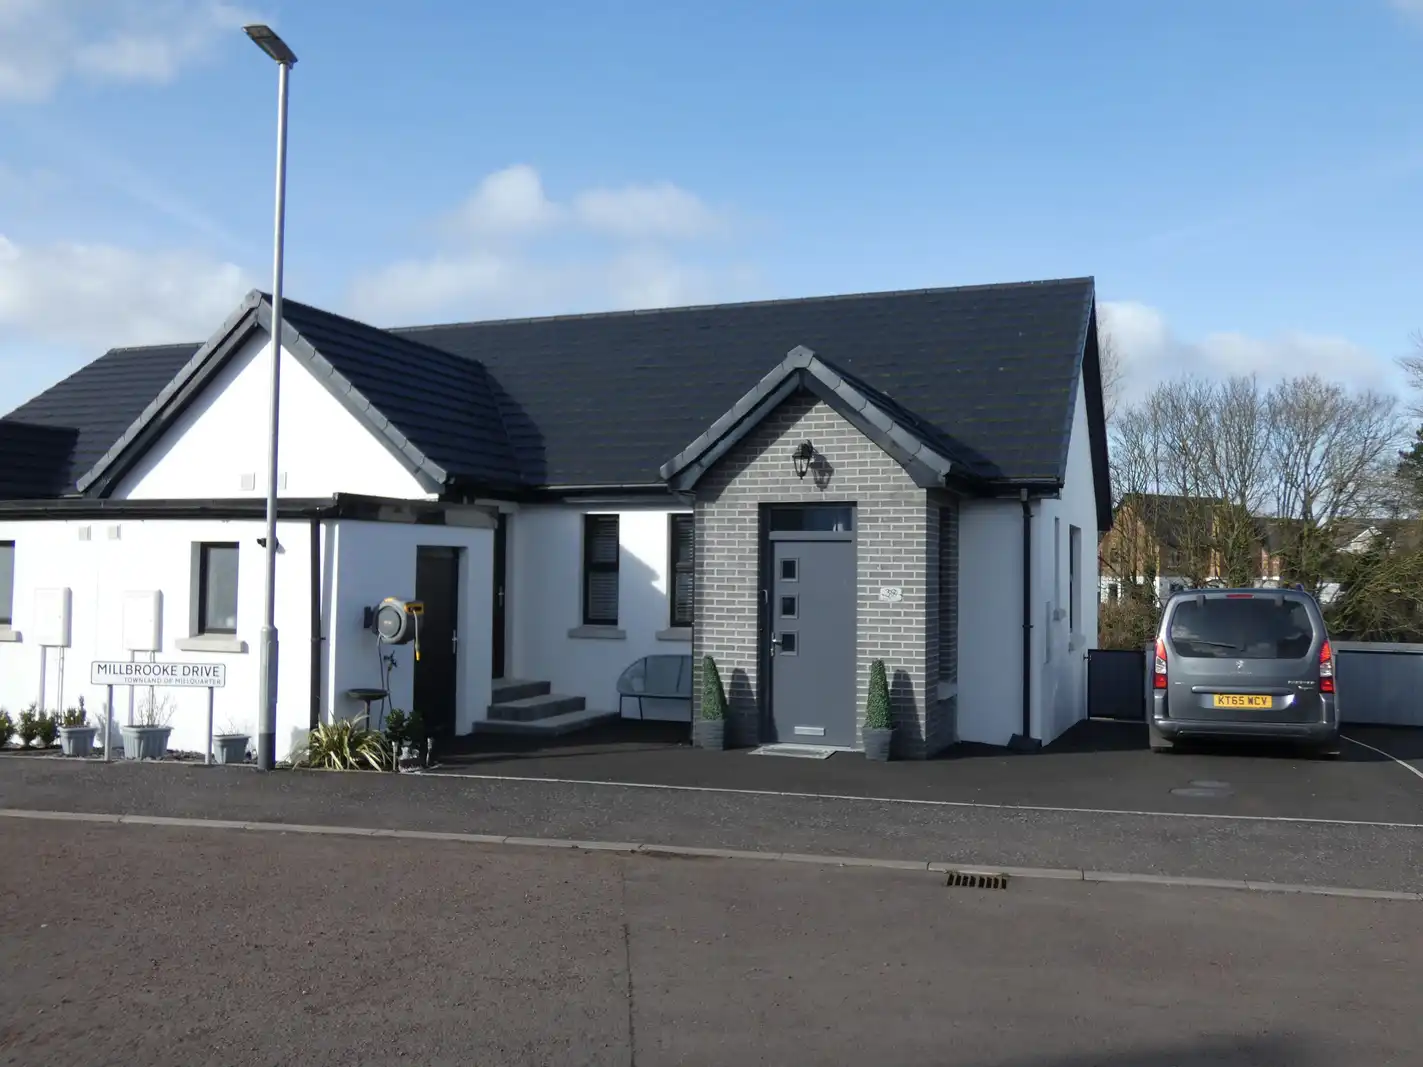 39 Millbrooke Drive, Ballymoney, County Antrim